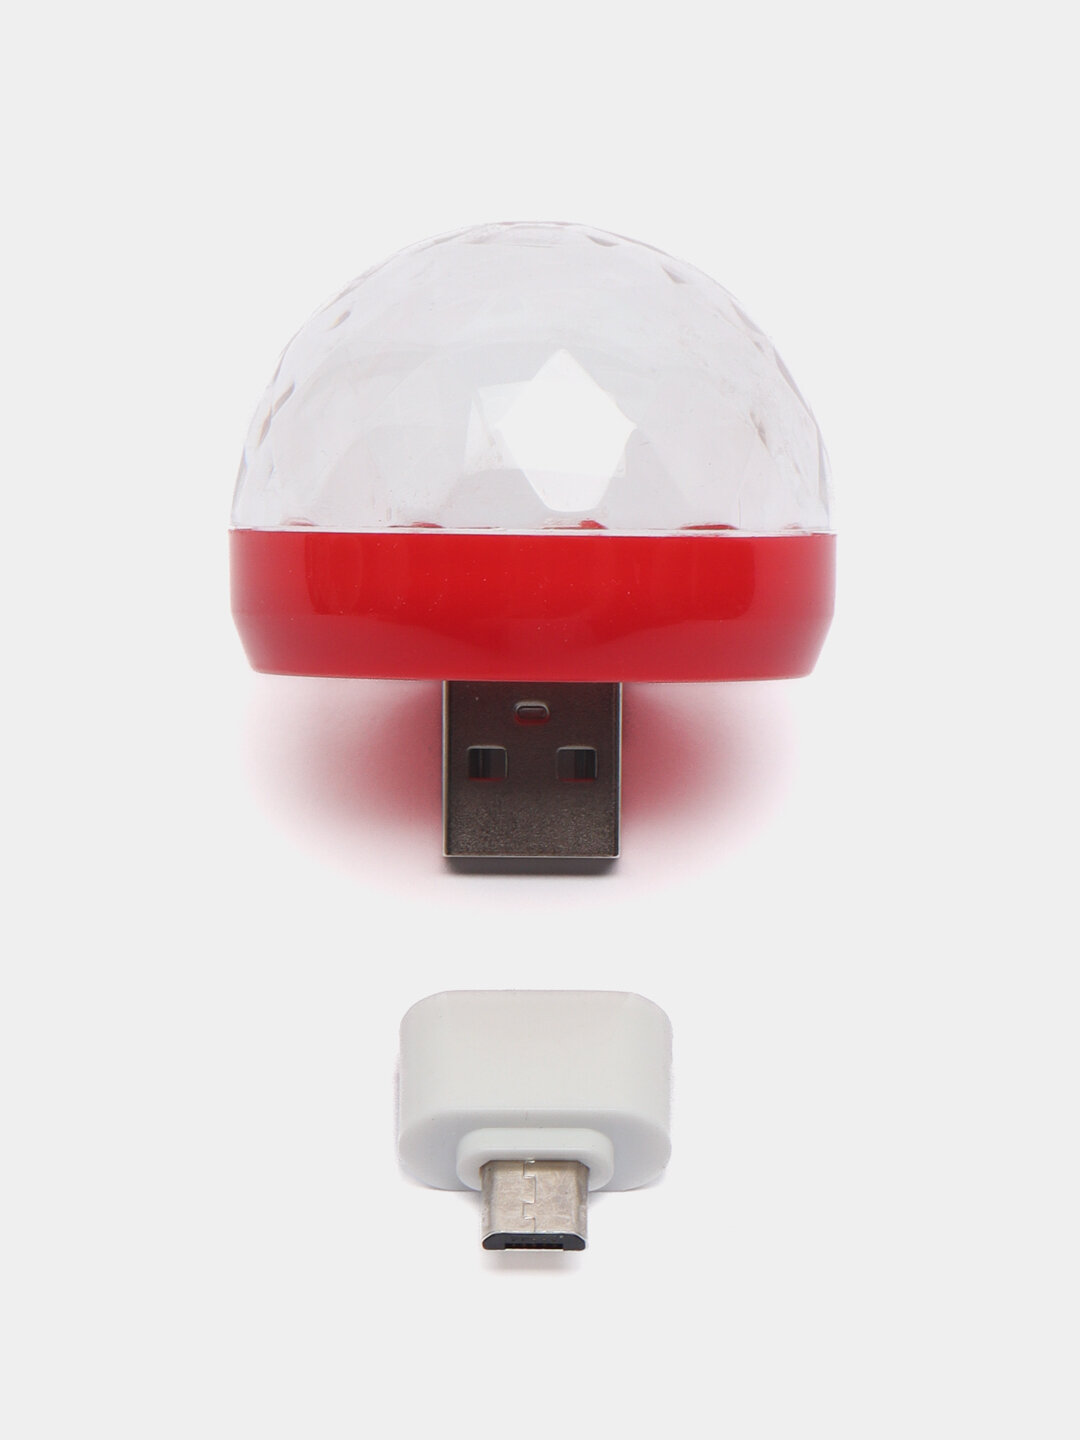 Мини диско шар от USB Тип переходника Micro USB, Цвет Красный